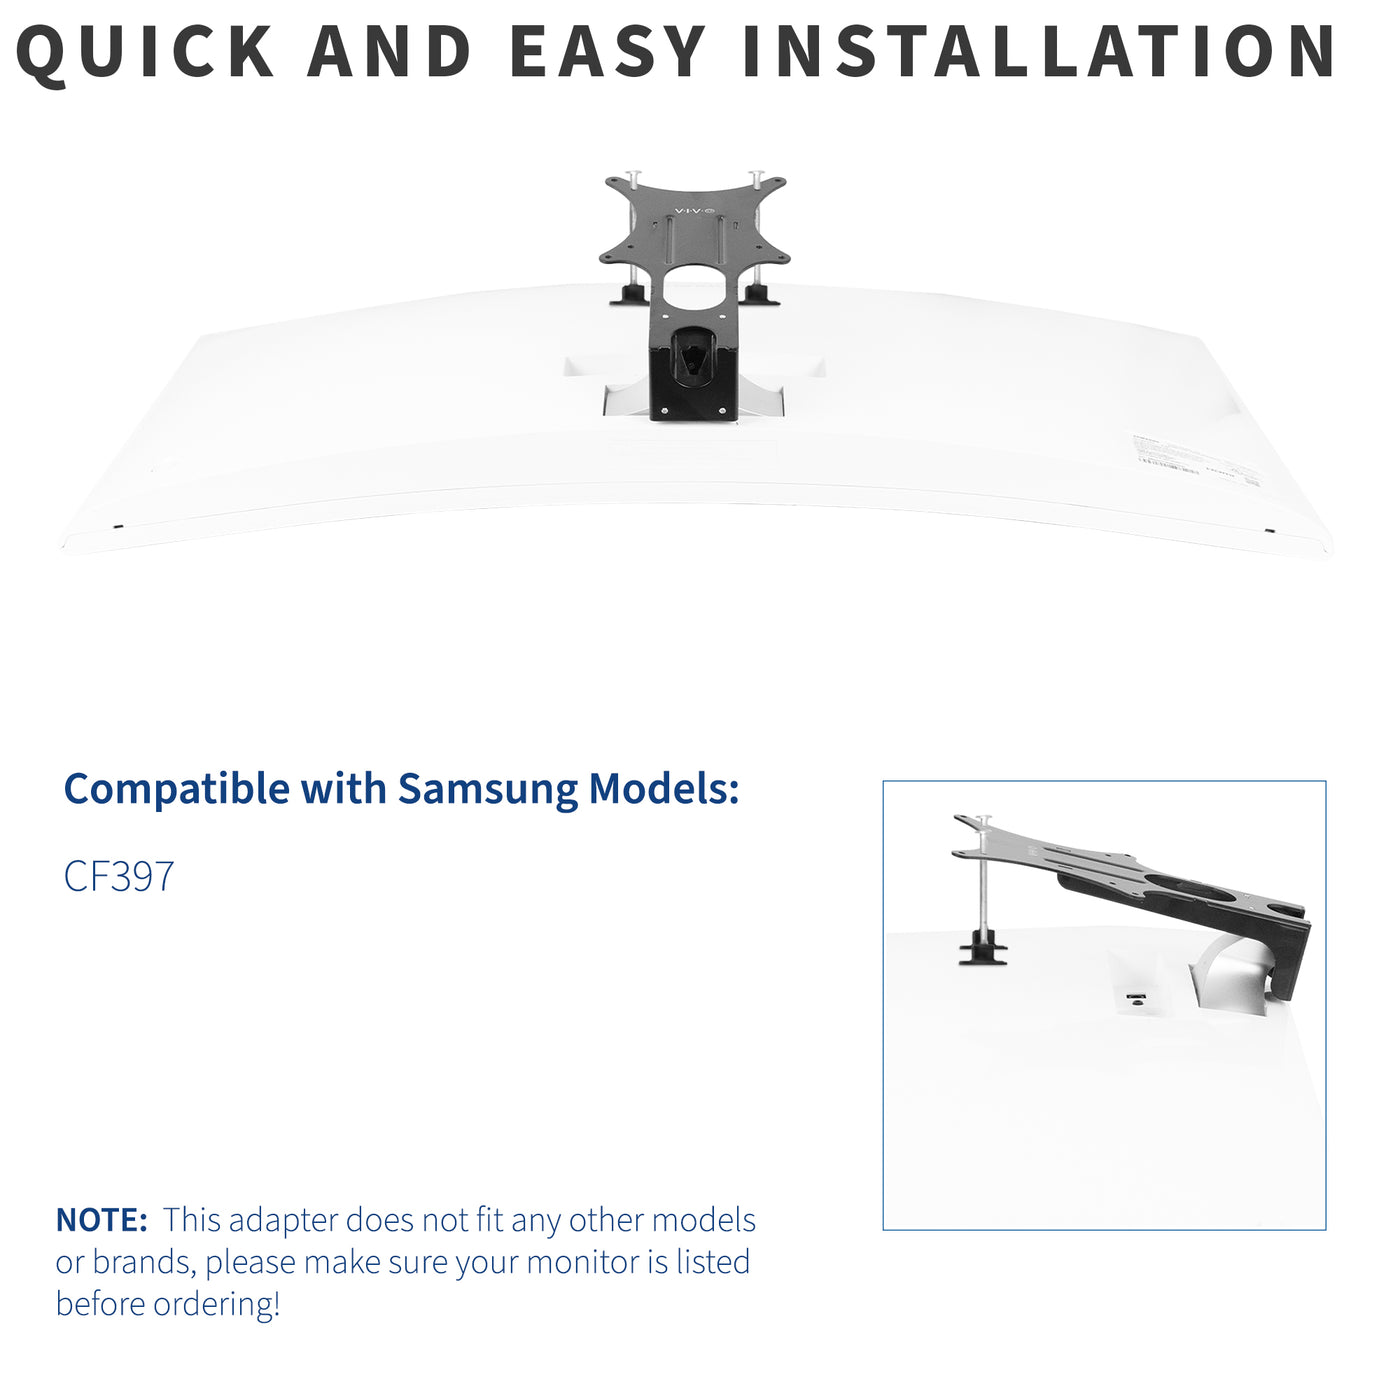 Bracket adapter for Samsung models CF397 only.